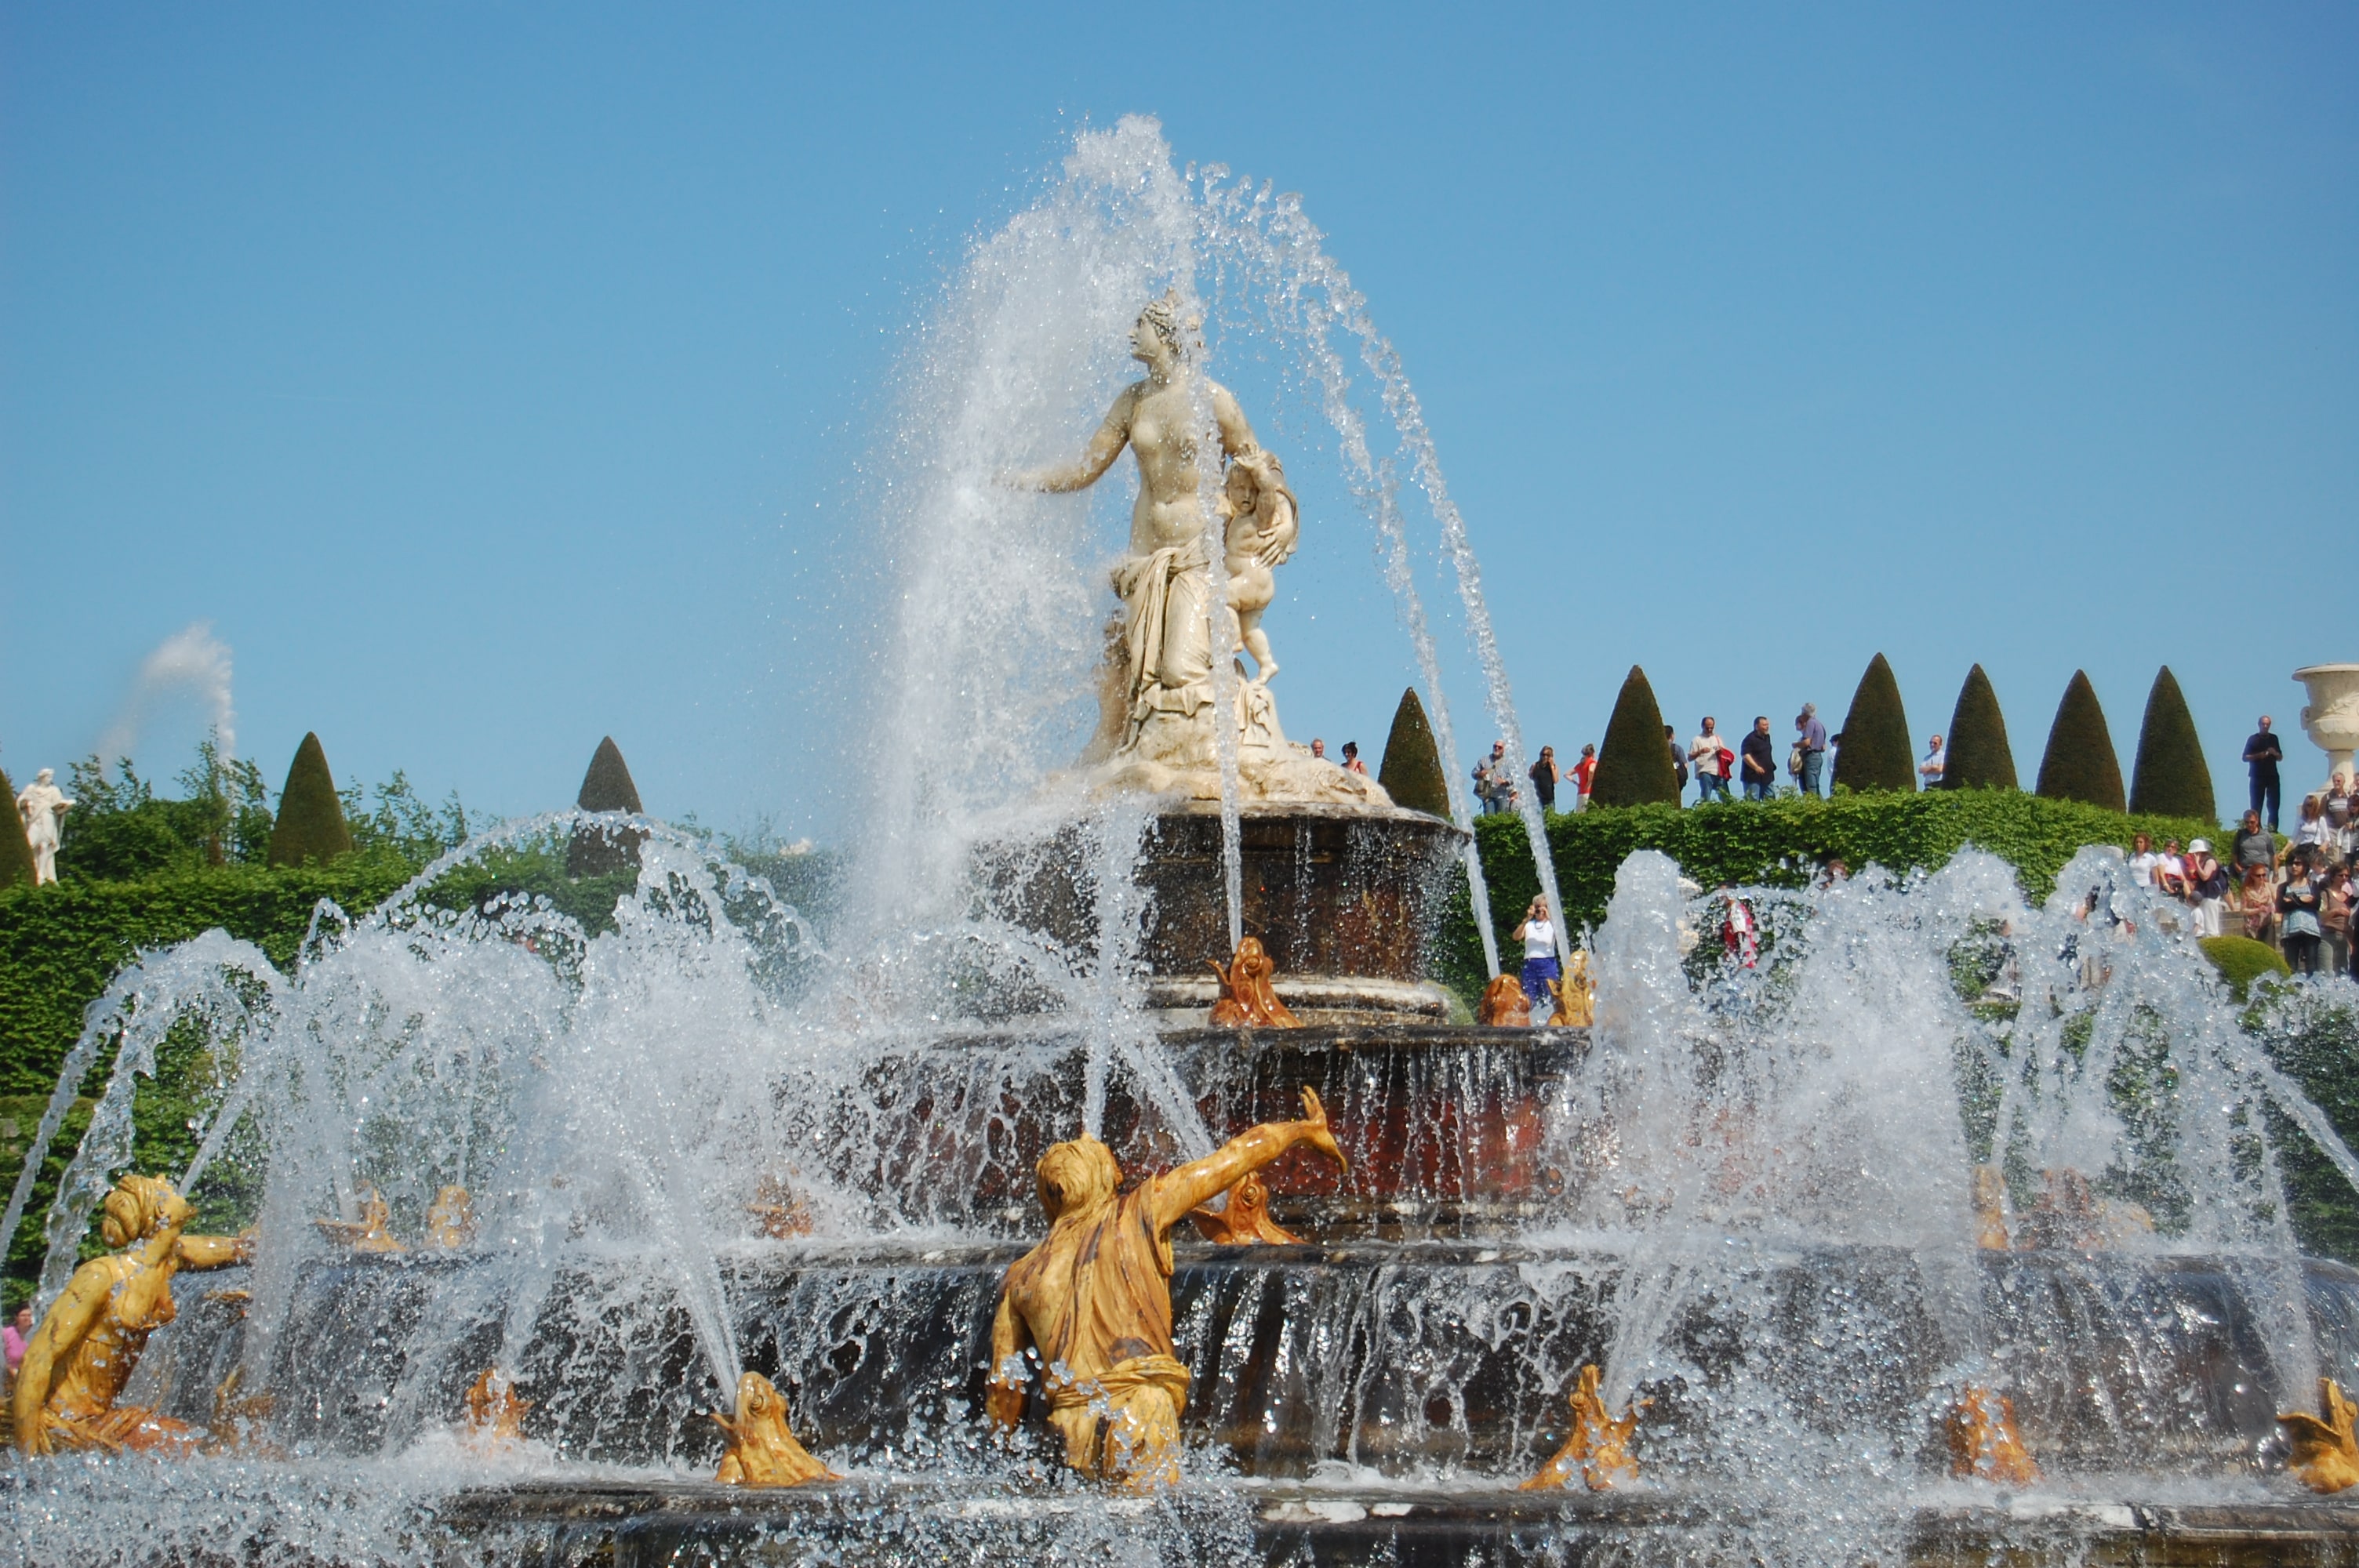 Fountain in the Parc de Versailles